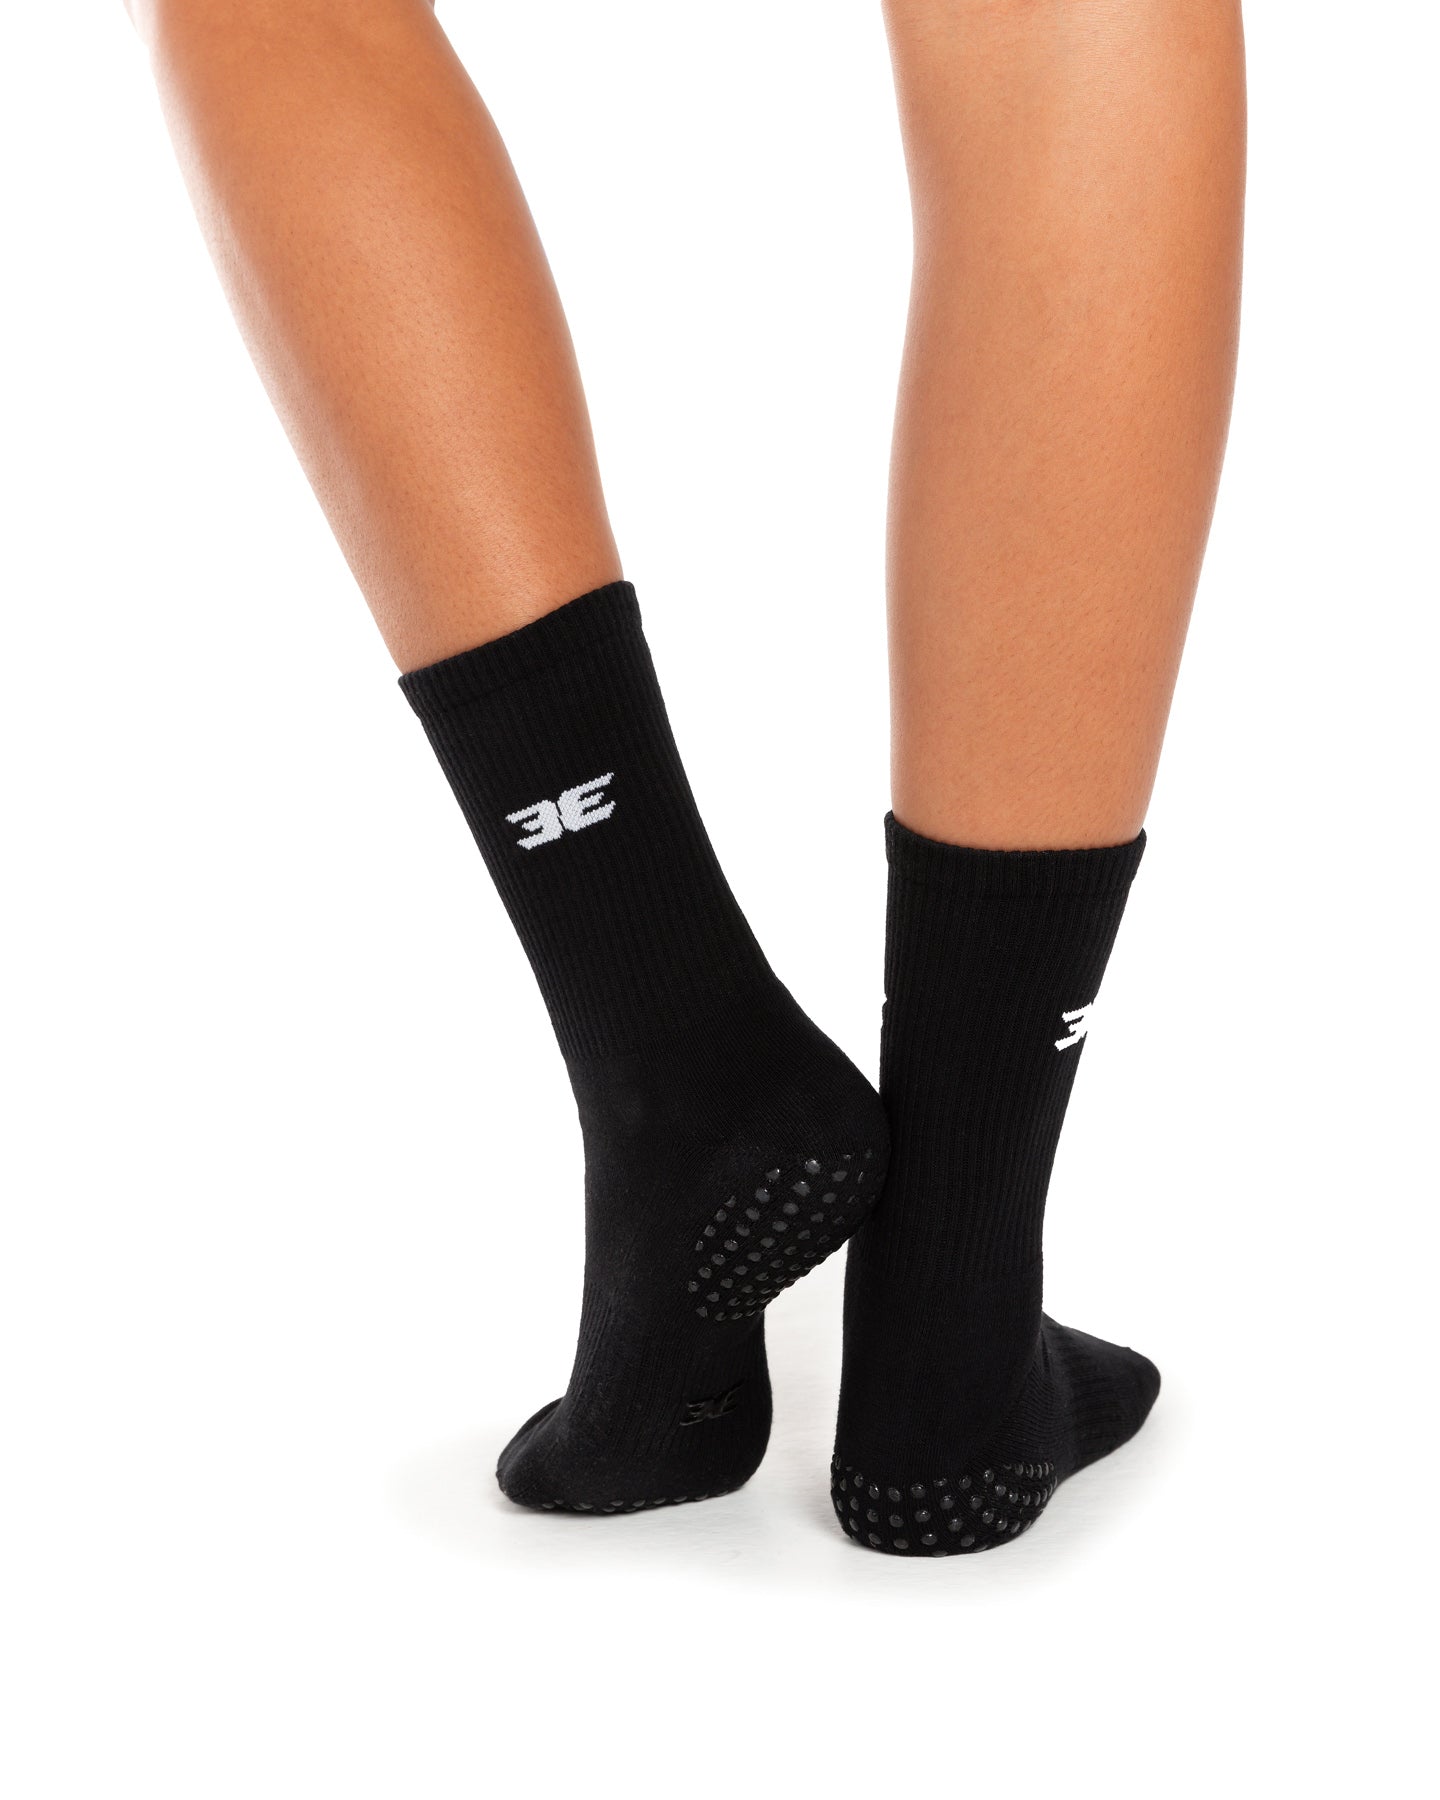 Grip Athletic Socks - Black